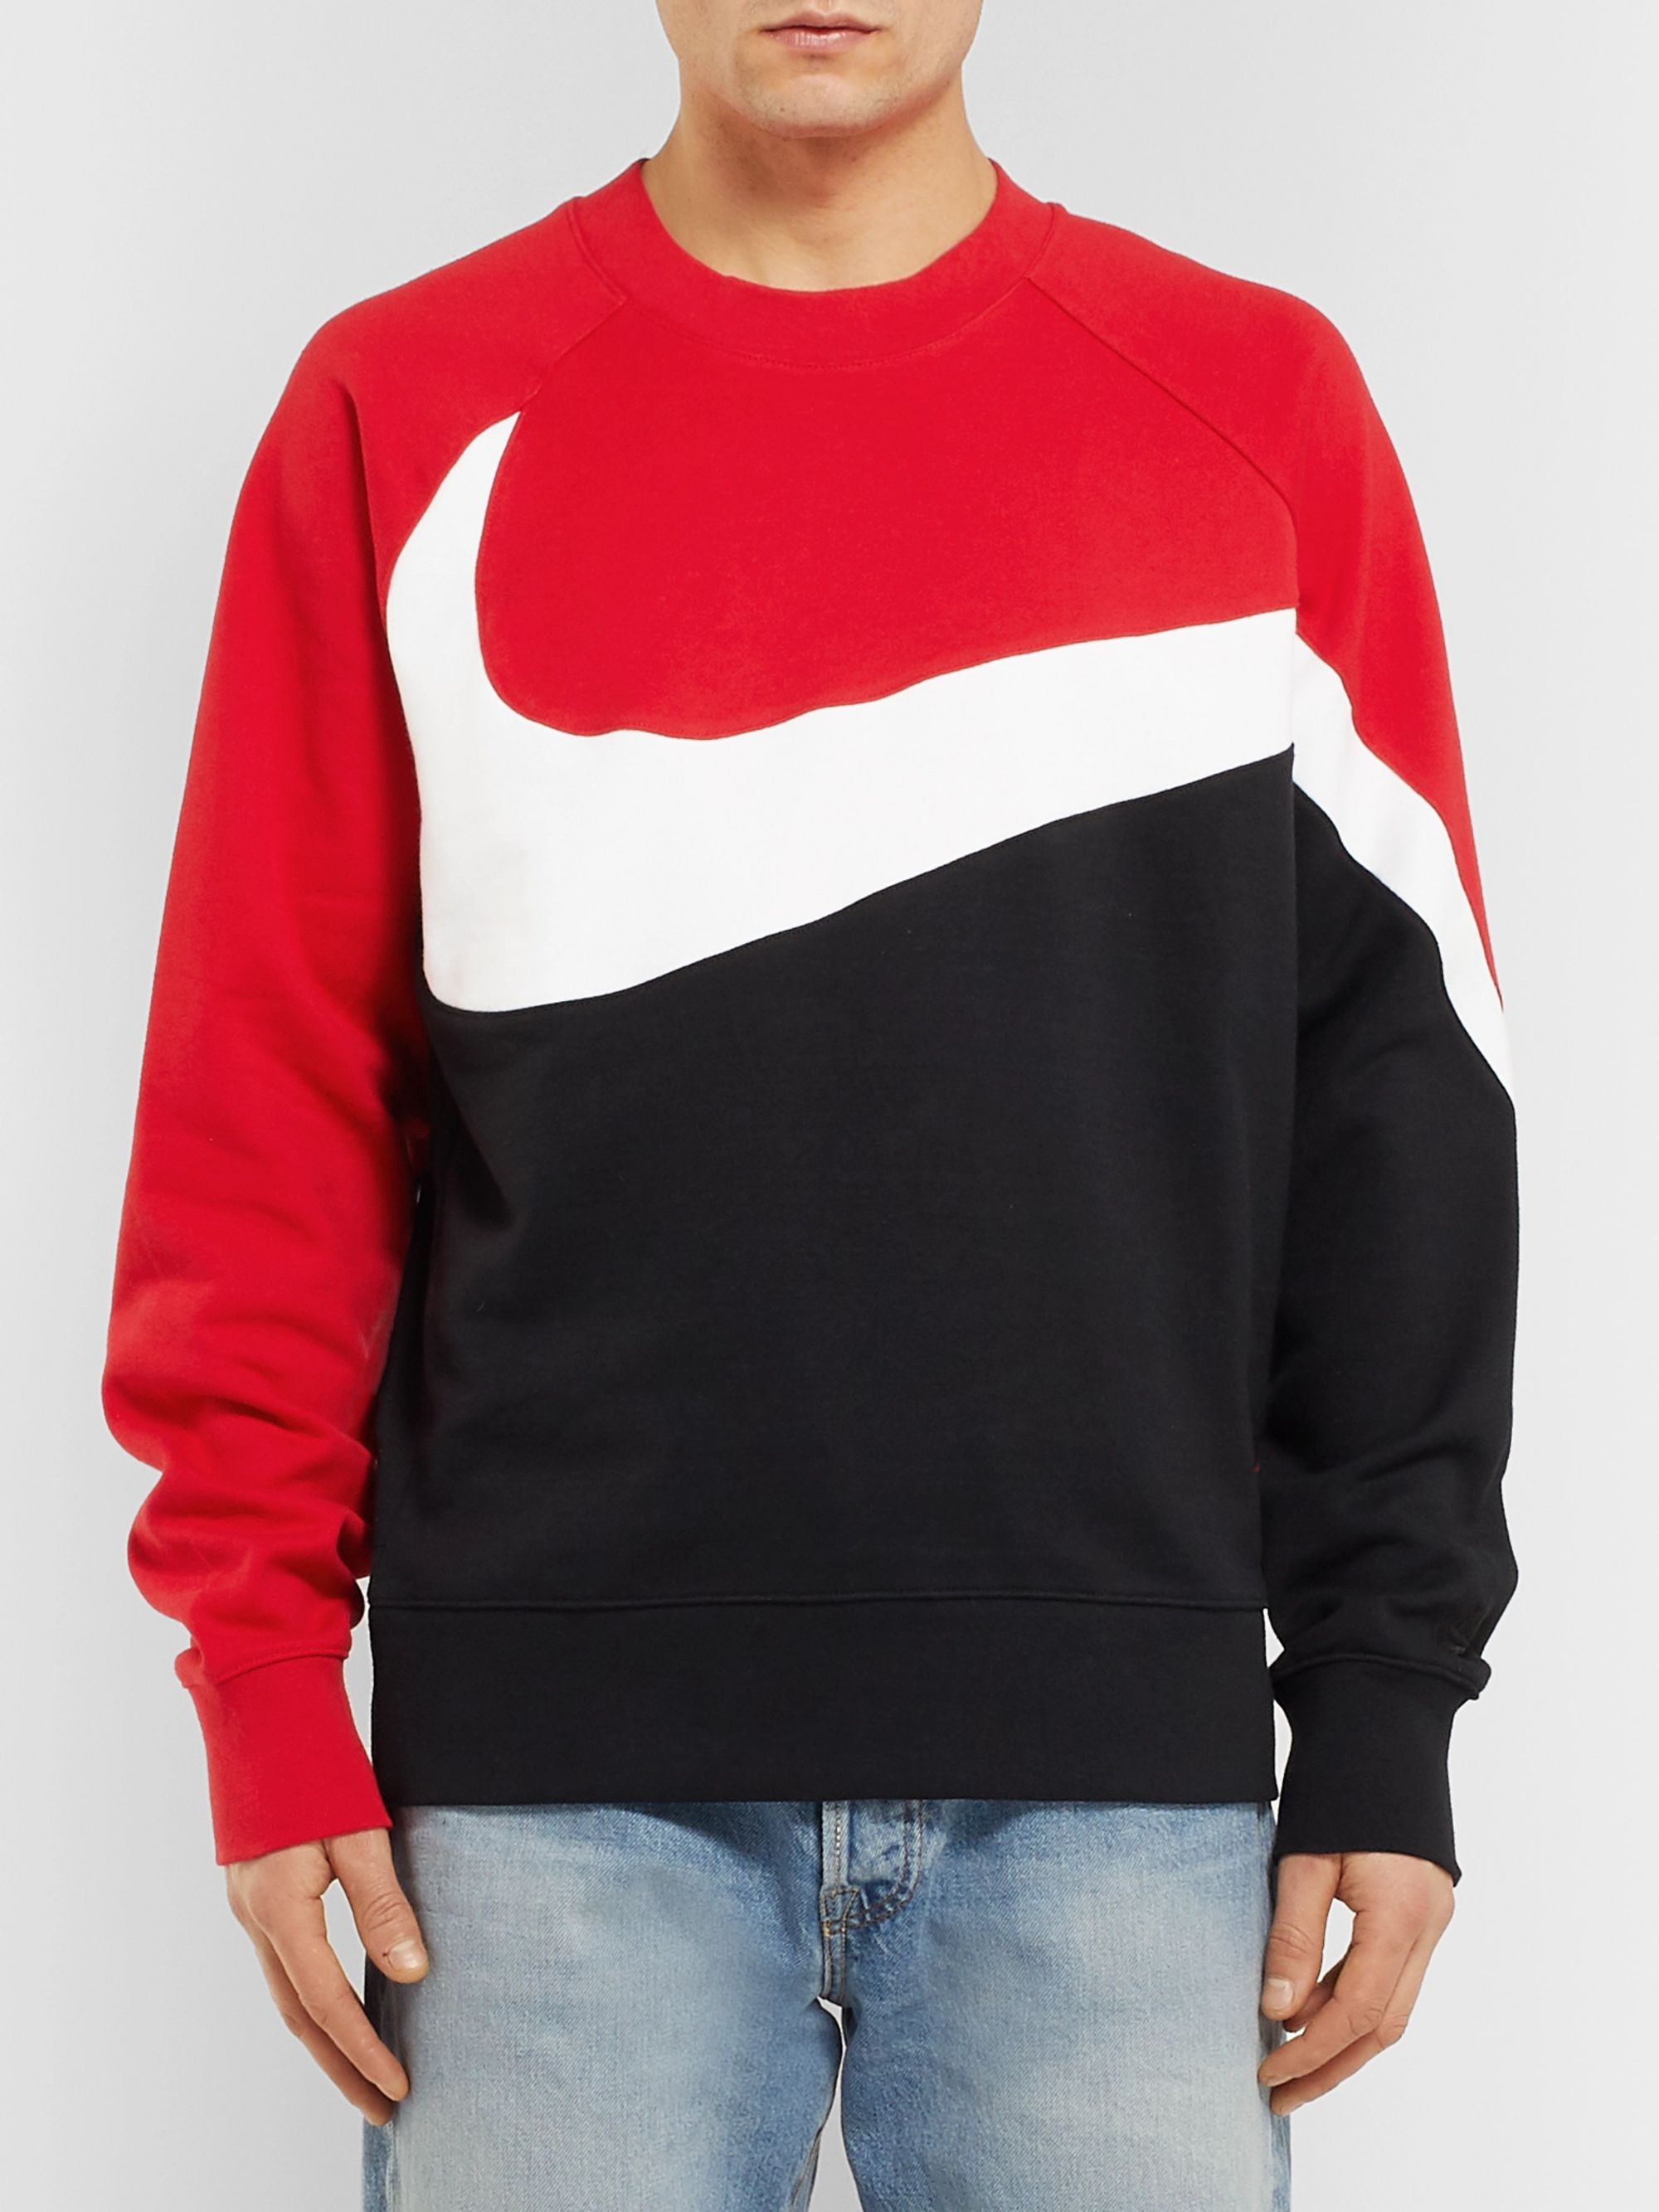 Multi Colour-Block Loopback Cotton-Blend Jersey Sweatshirt | Nike | MR ...